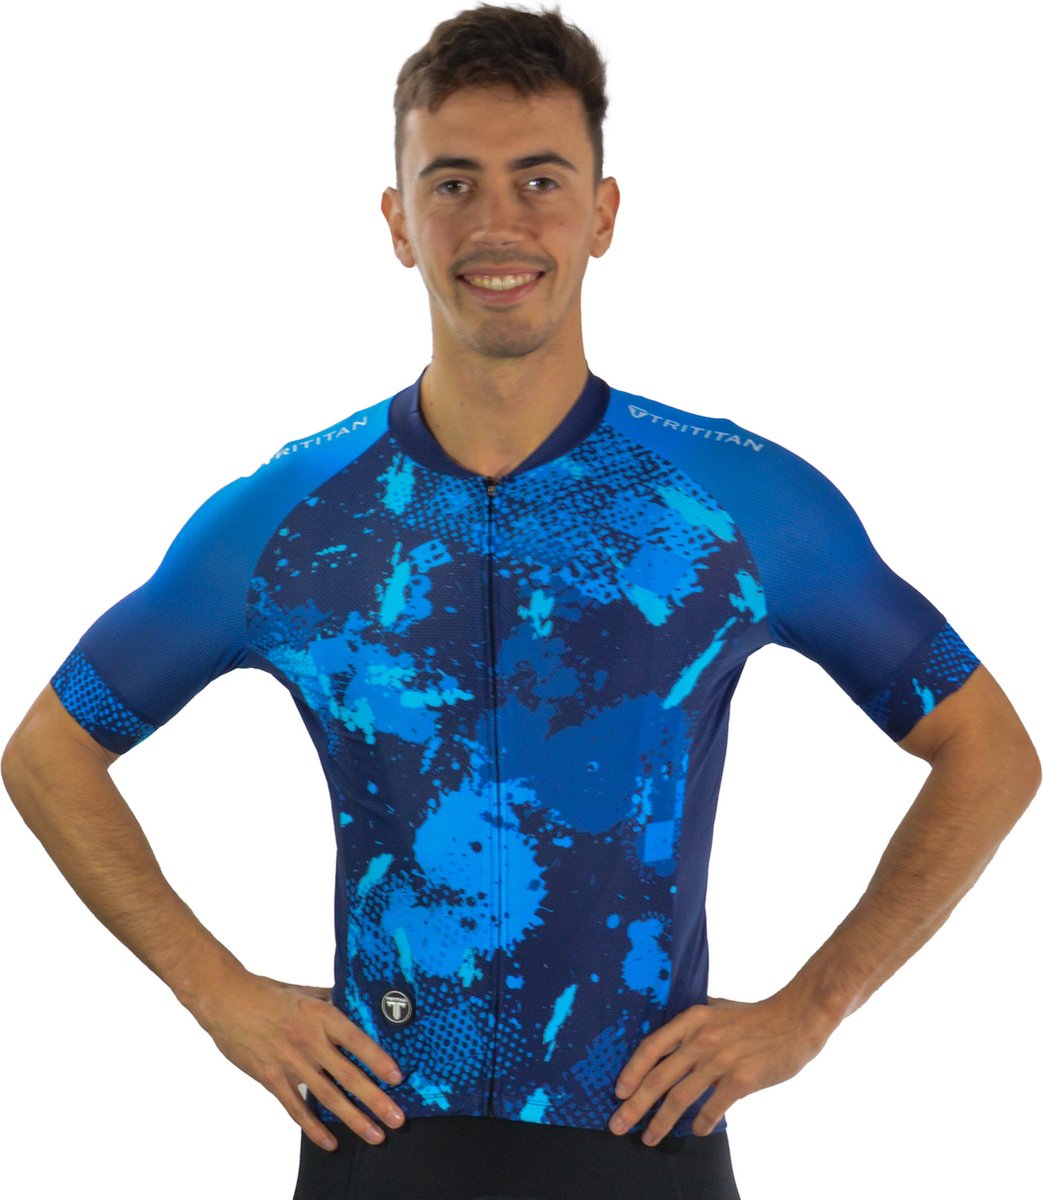 TriTiTan Male Elite Level Cycling Jersey with powerband - Fietsshirt - Fietstrui - 3XL